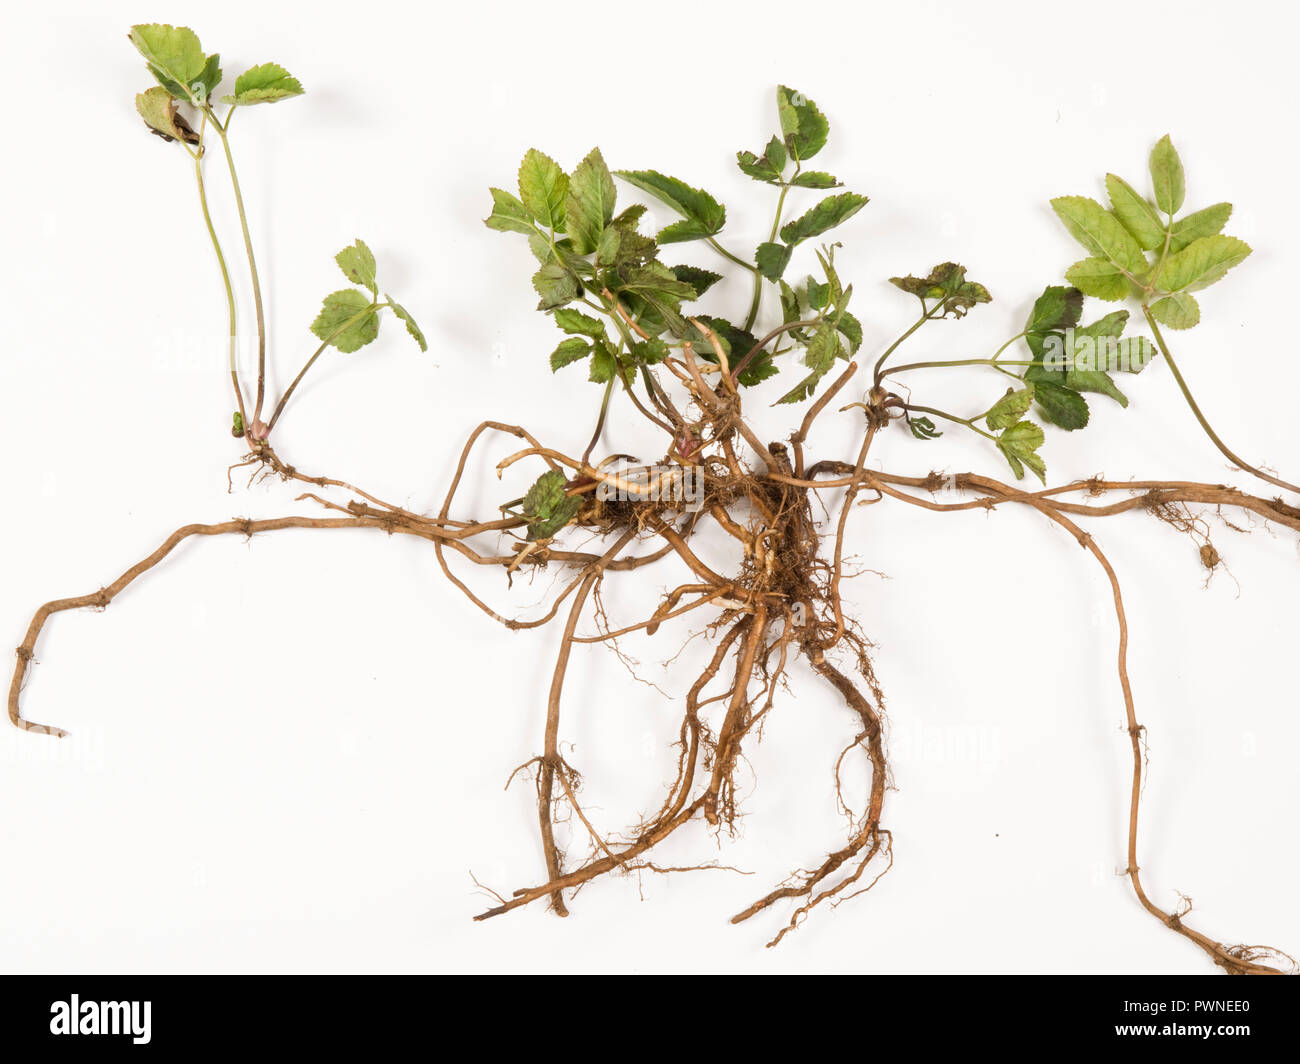 Ground elder, Aegopodium podagraria, plant from a vegetable patch sampled to show creeping rhizomatous roots Stock Photo